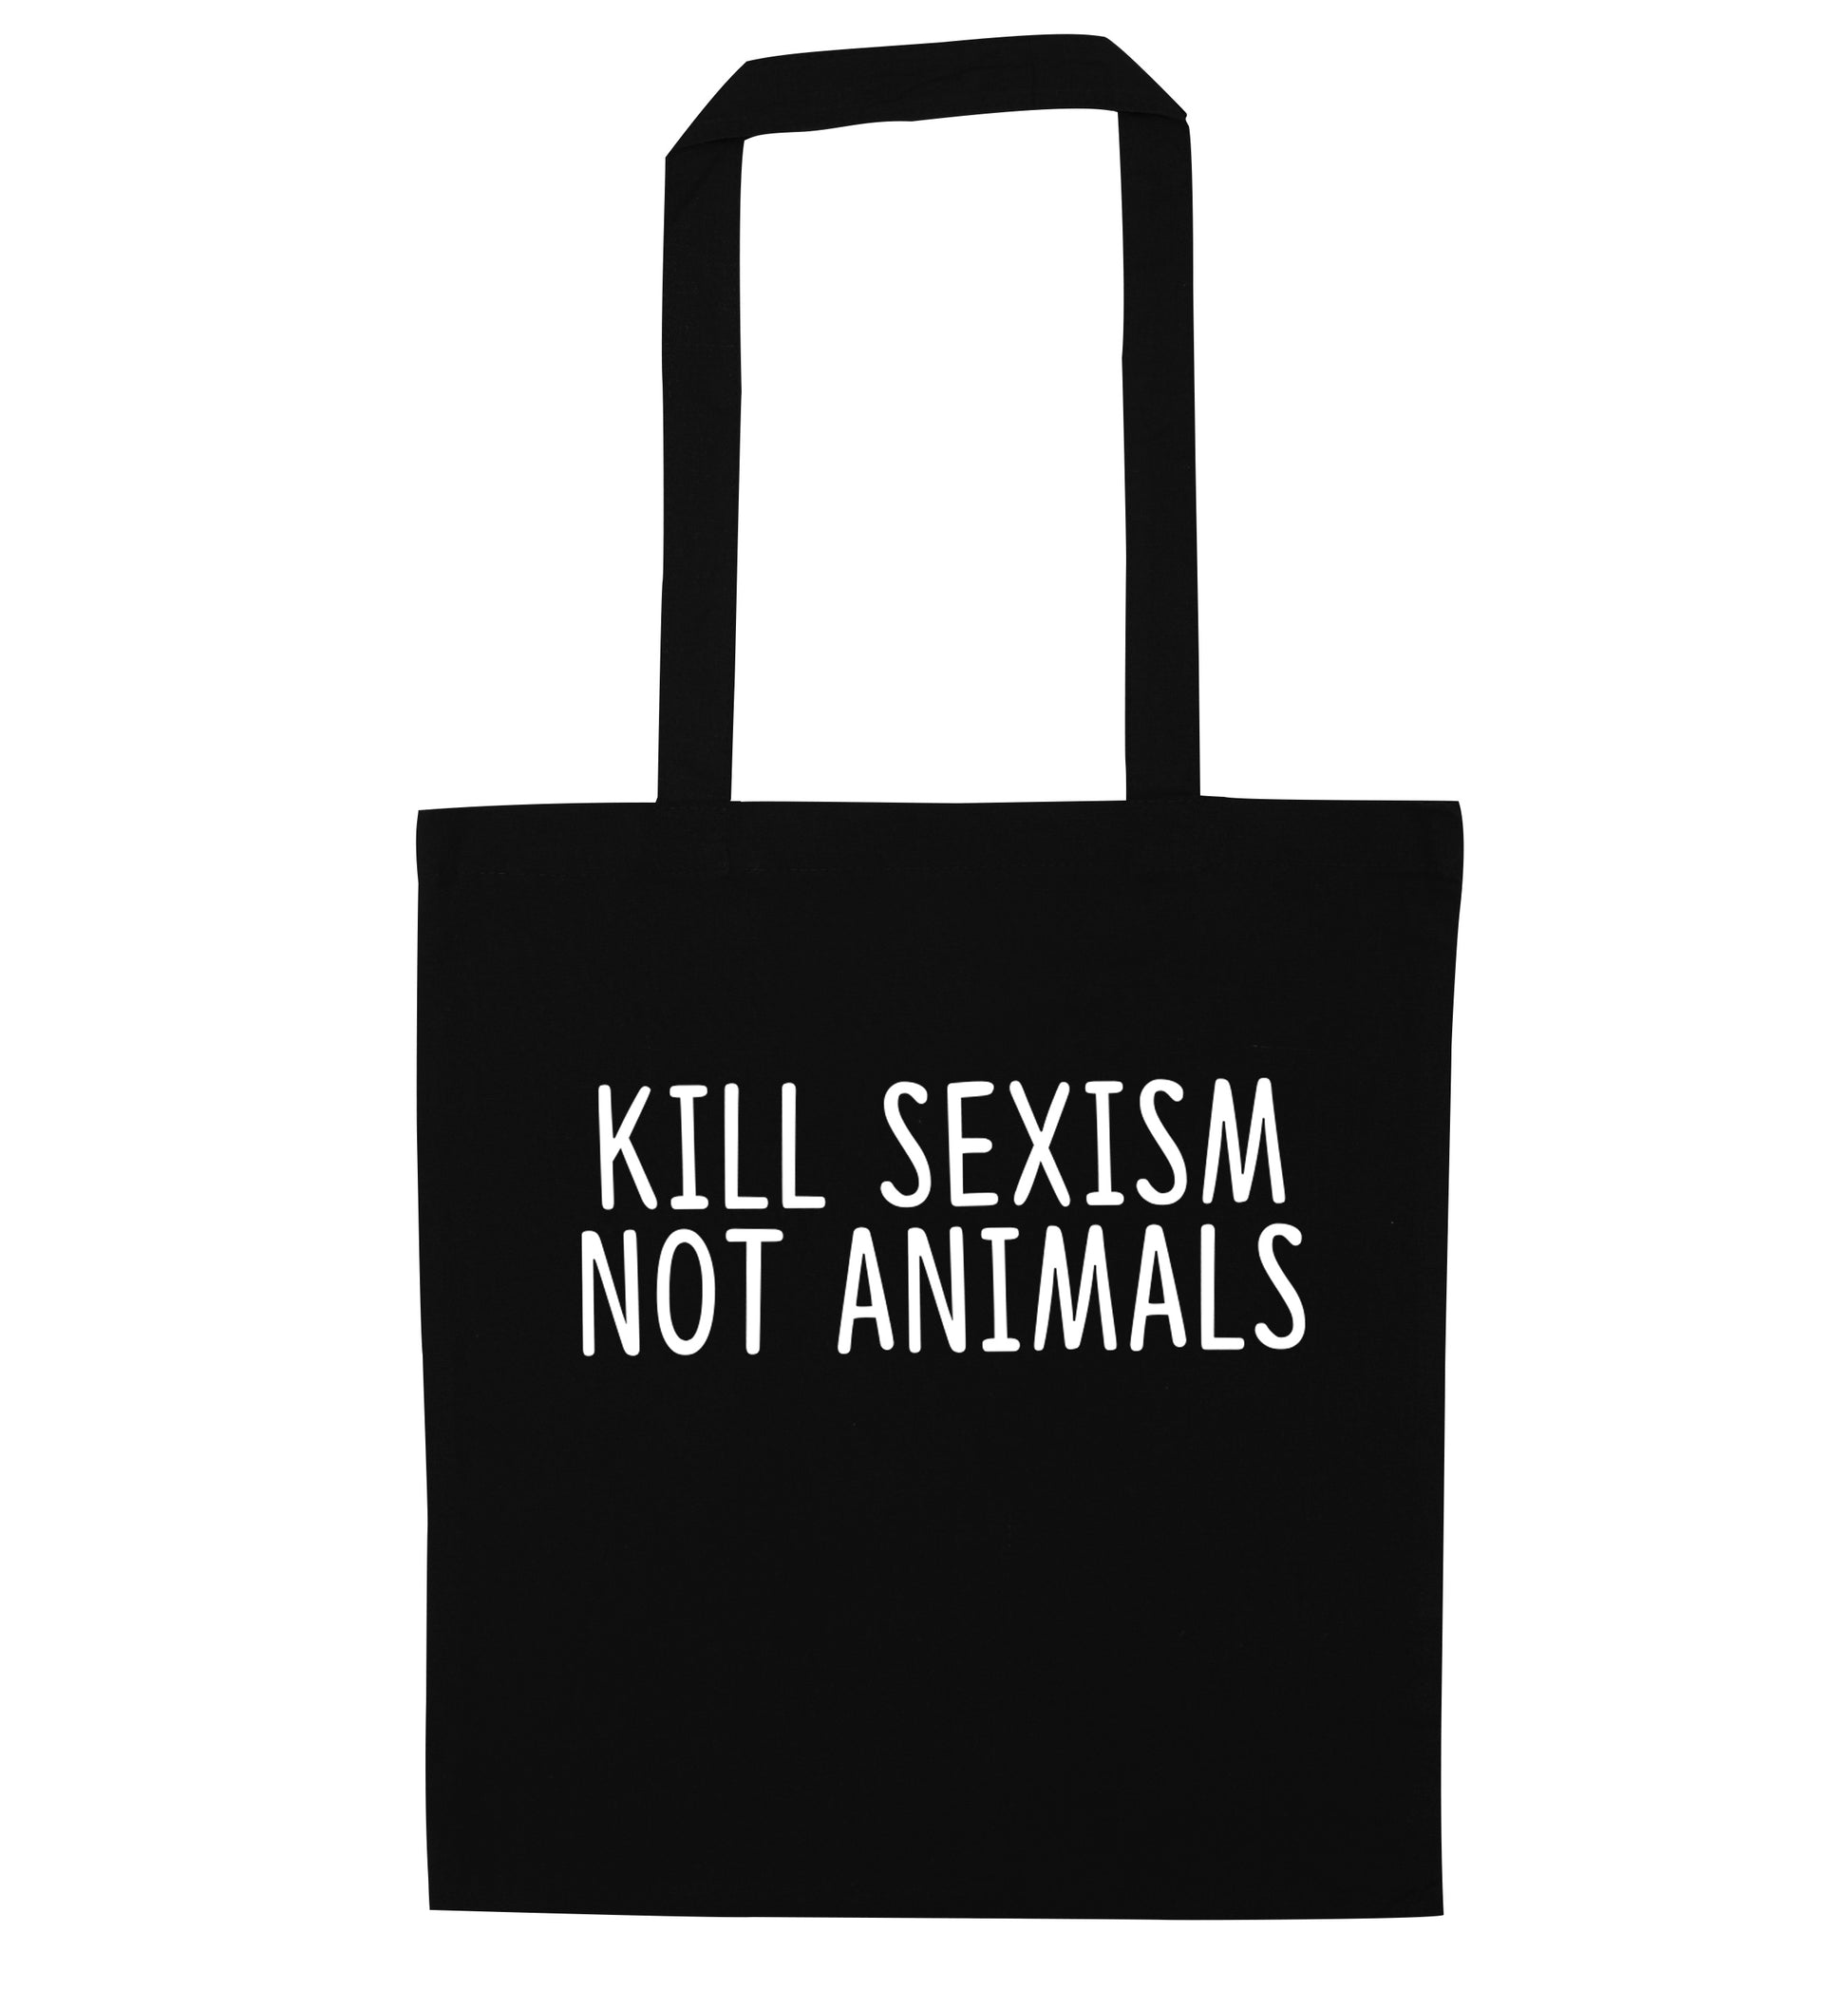 Kill Sexism Not Animals black tote bag